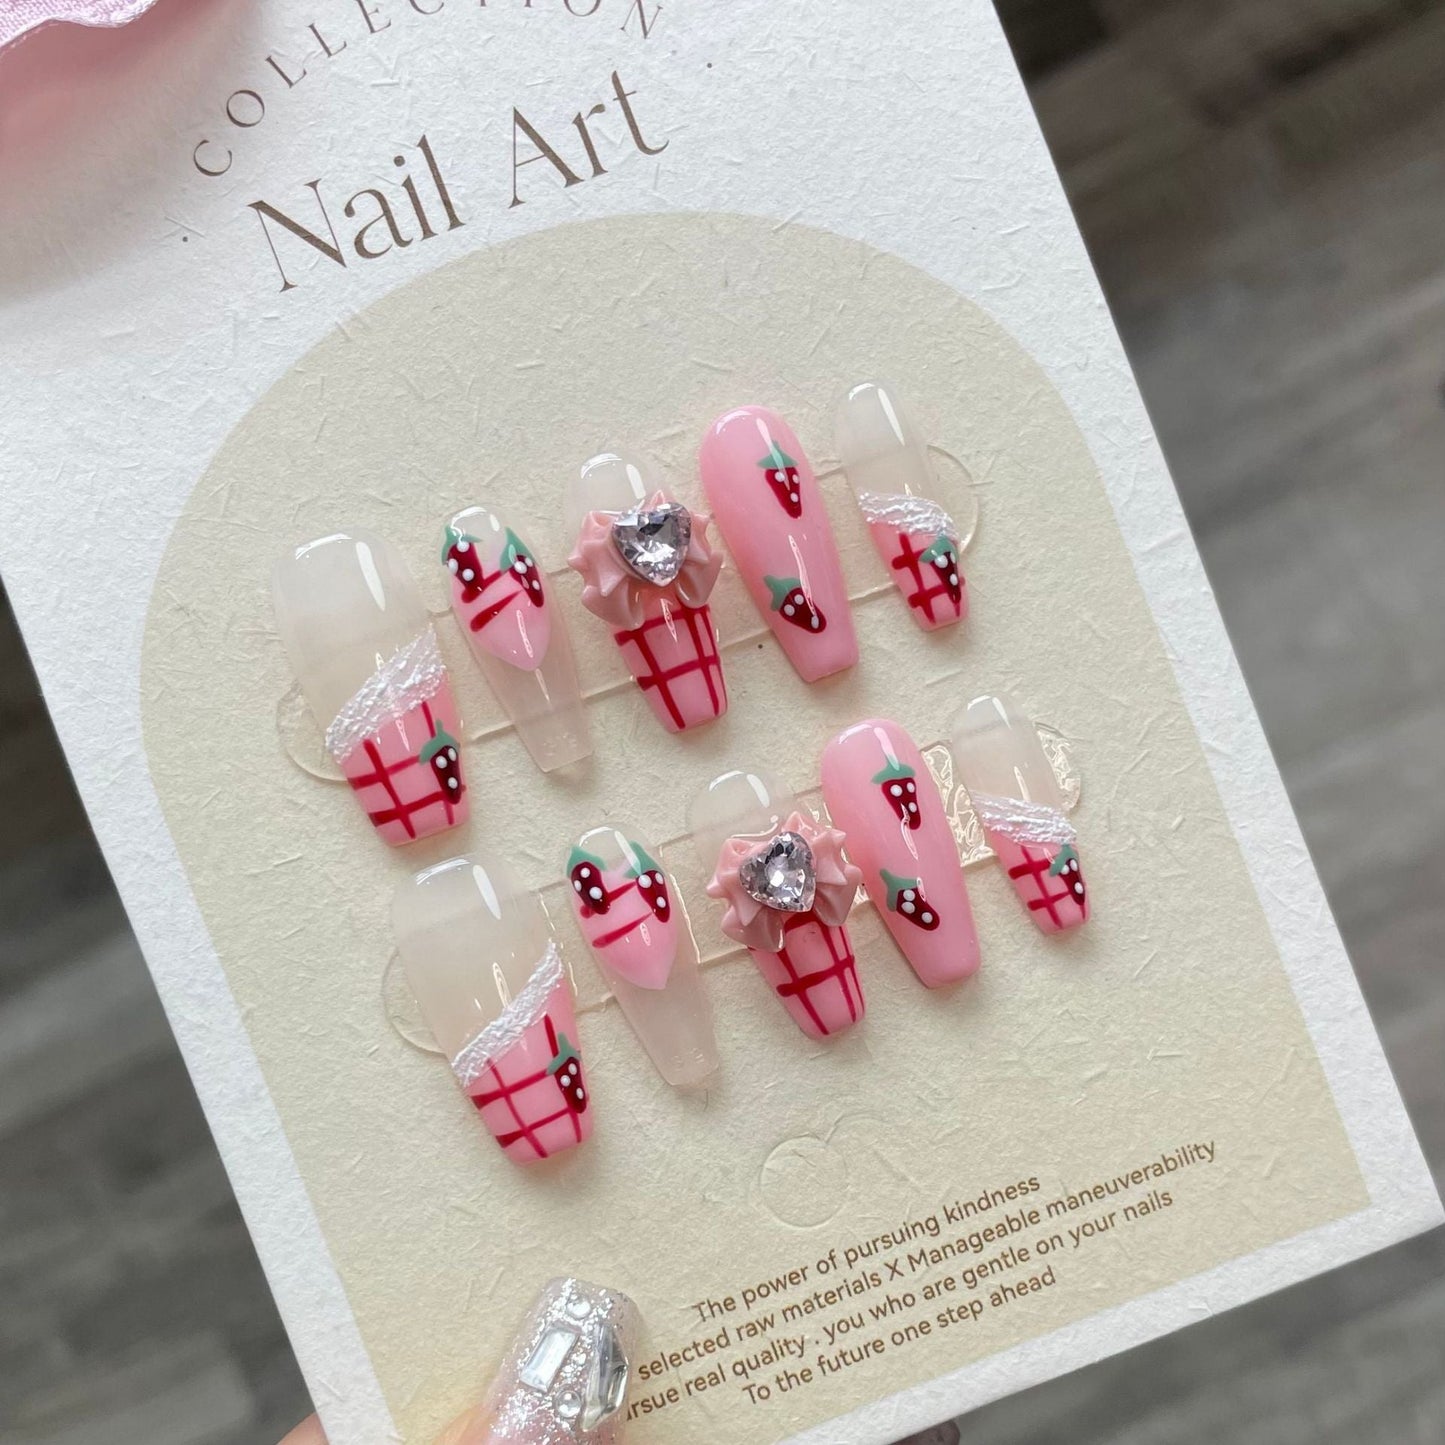 731 Fruit strawberry style press on nails 100% handmade false nails pink